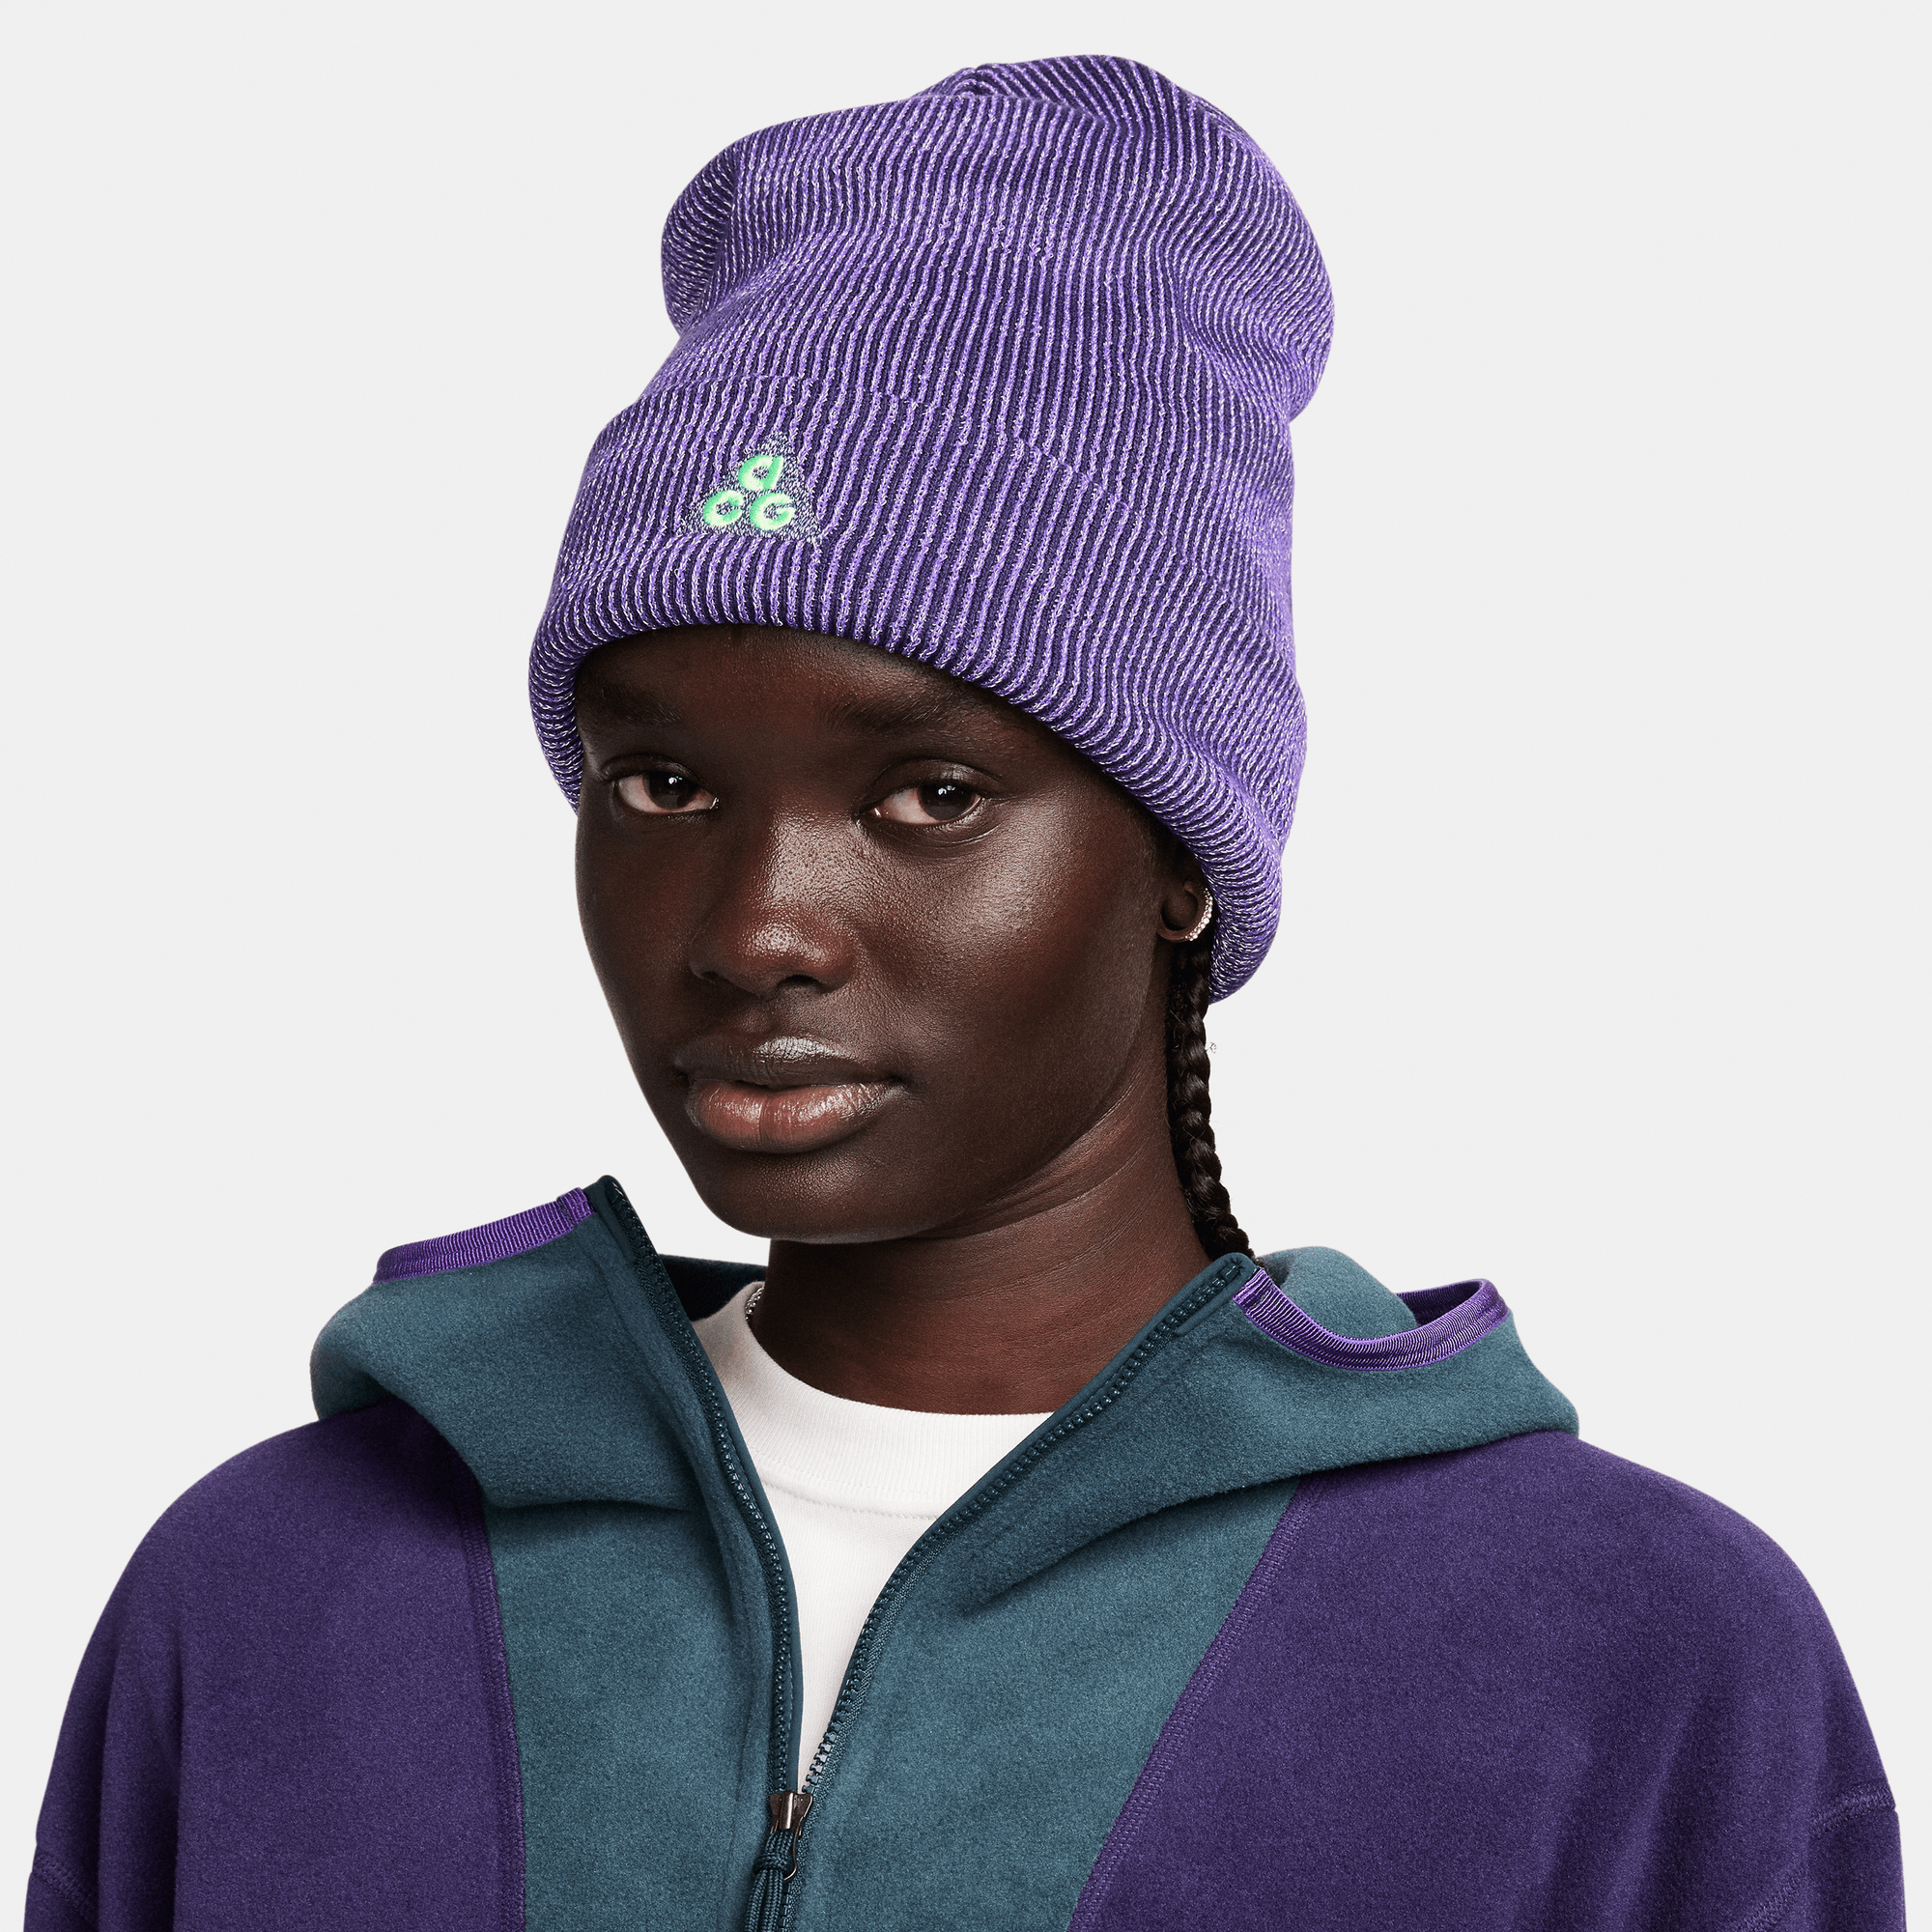 Nike Sportswear PEAK BEANIE UNISEX - Bonnet - purple cosmos/white/violet -  ZALANDO.BE